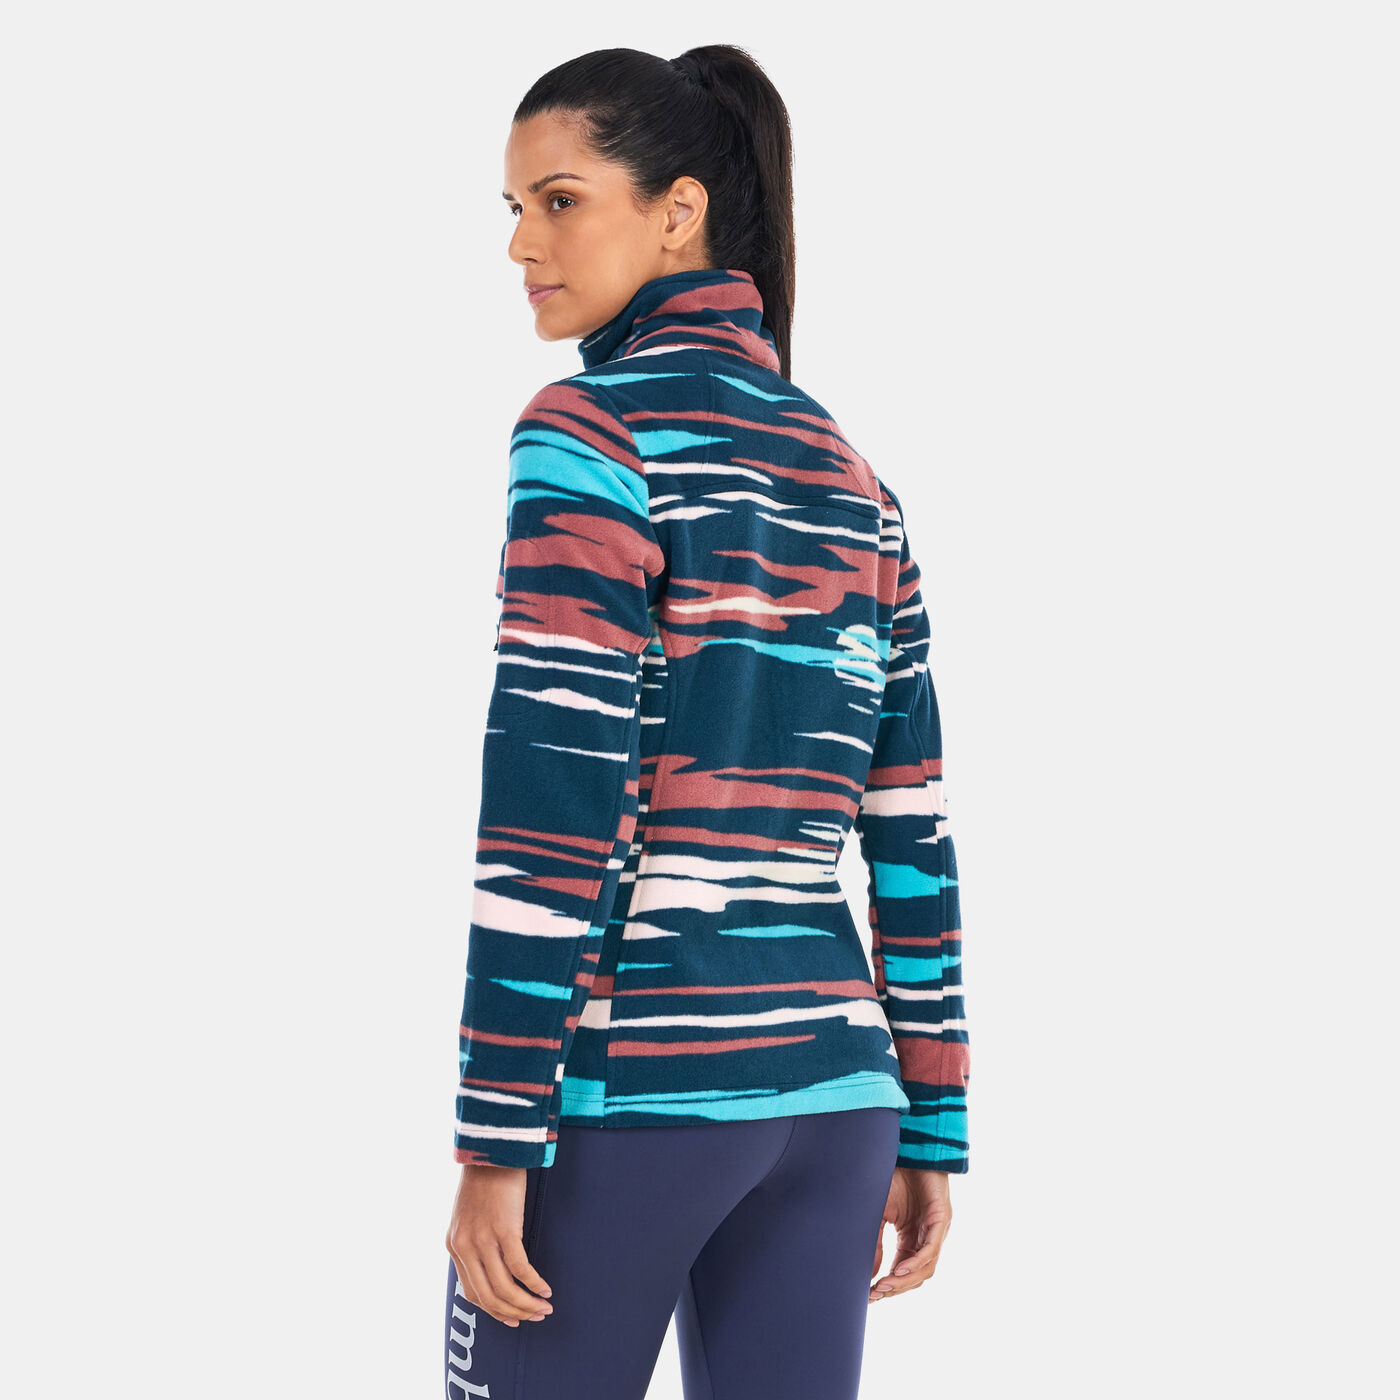 Women's Fast Trek Printed Fleece Jacket